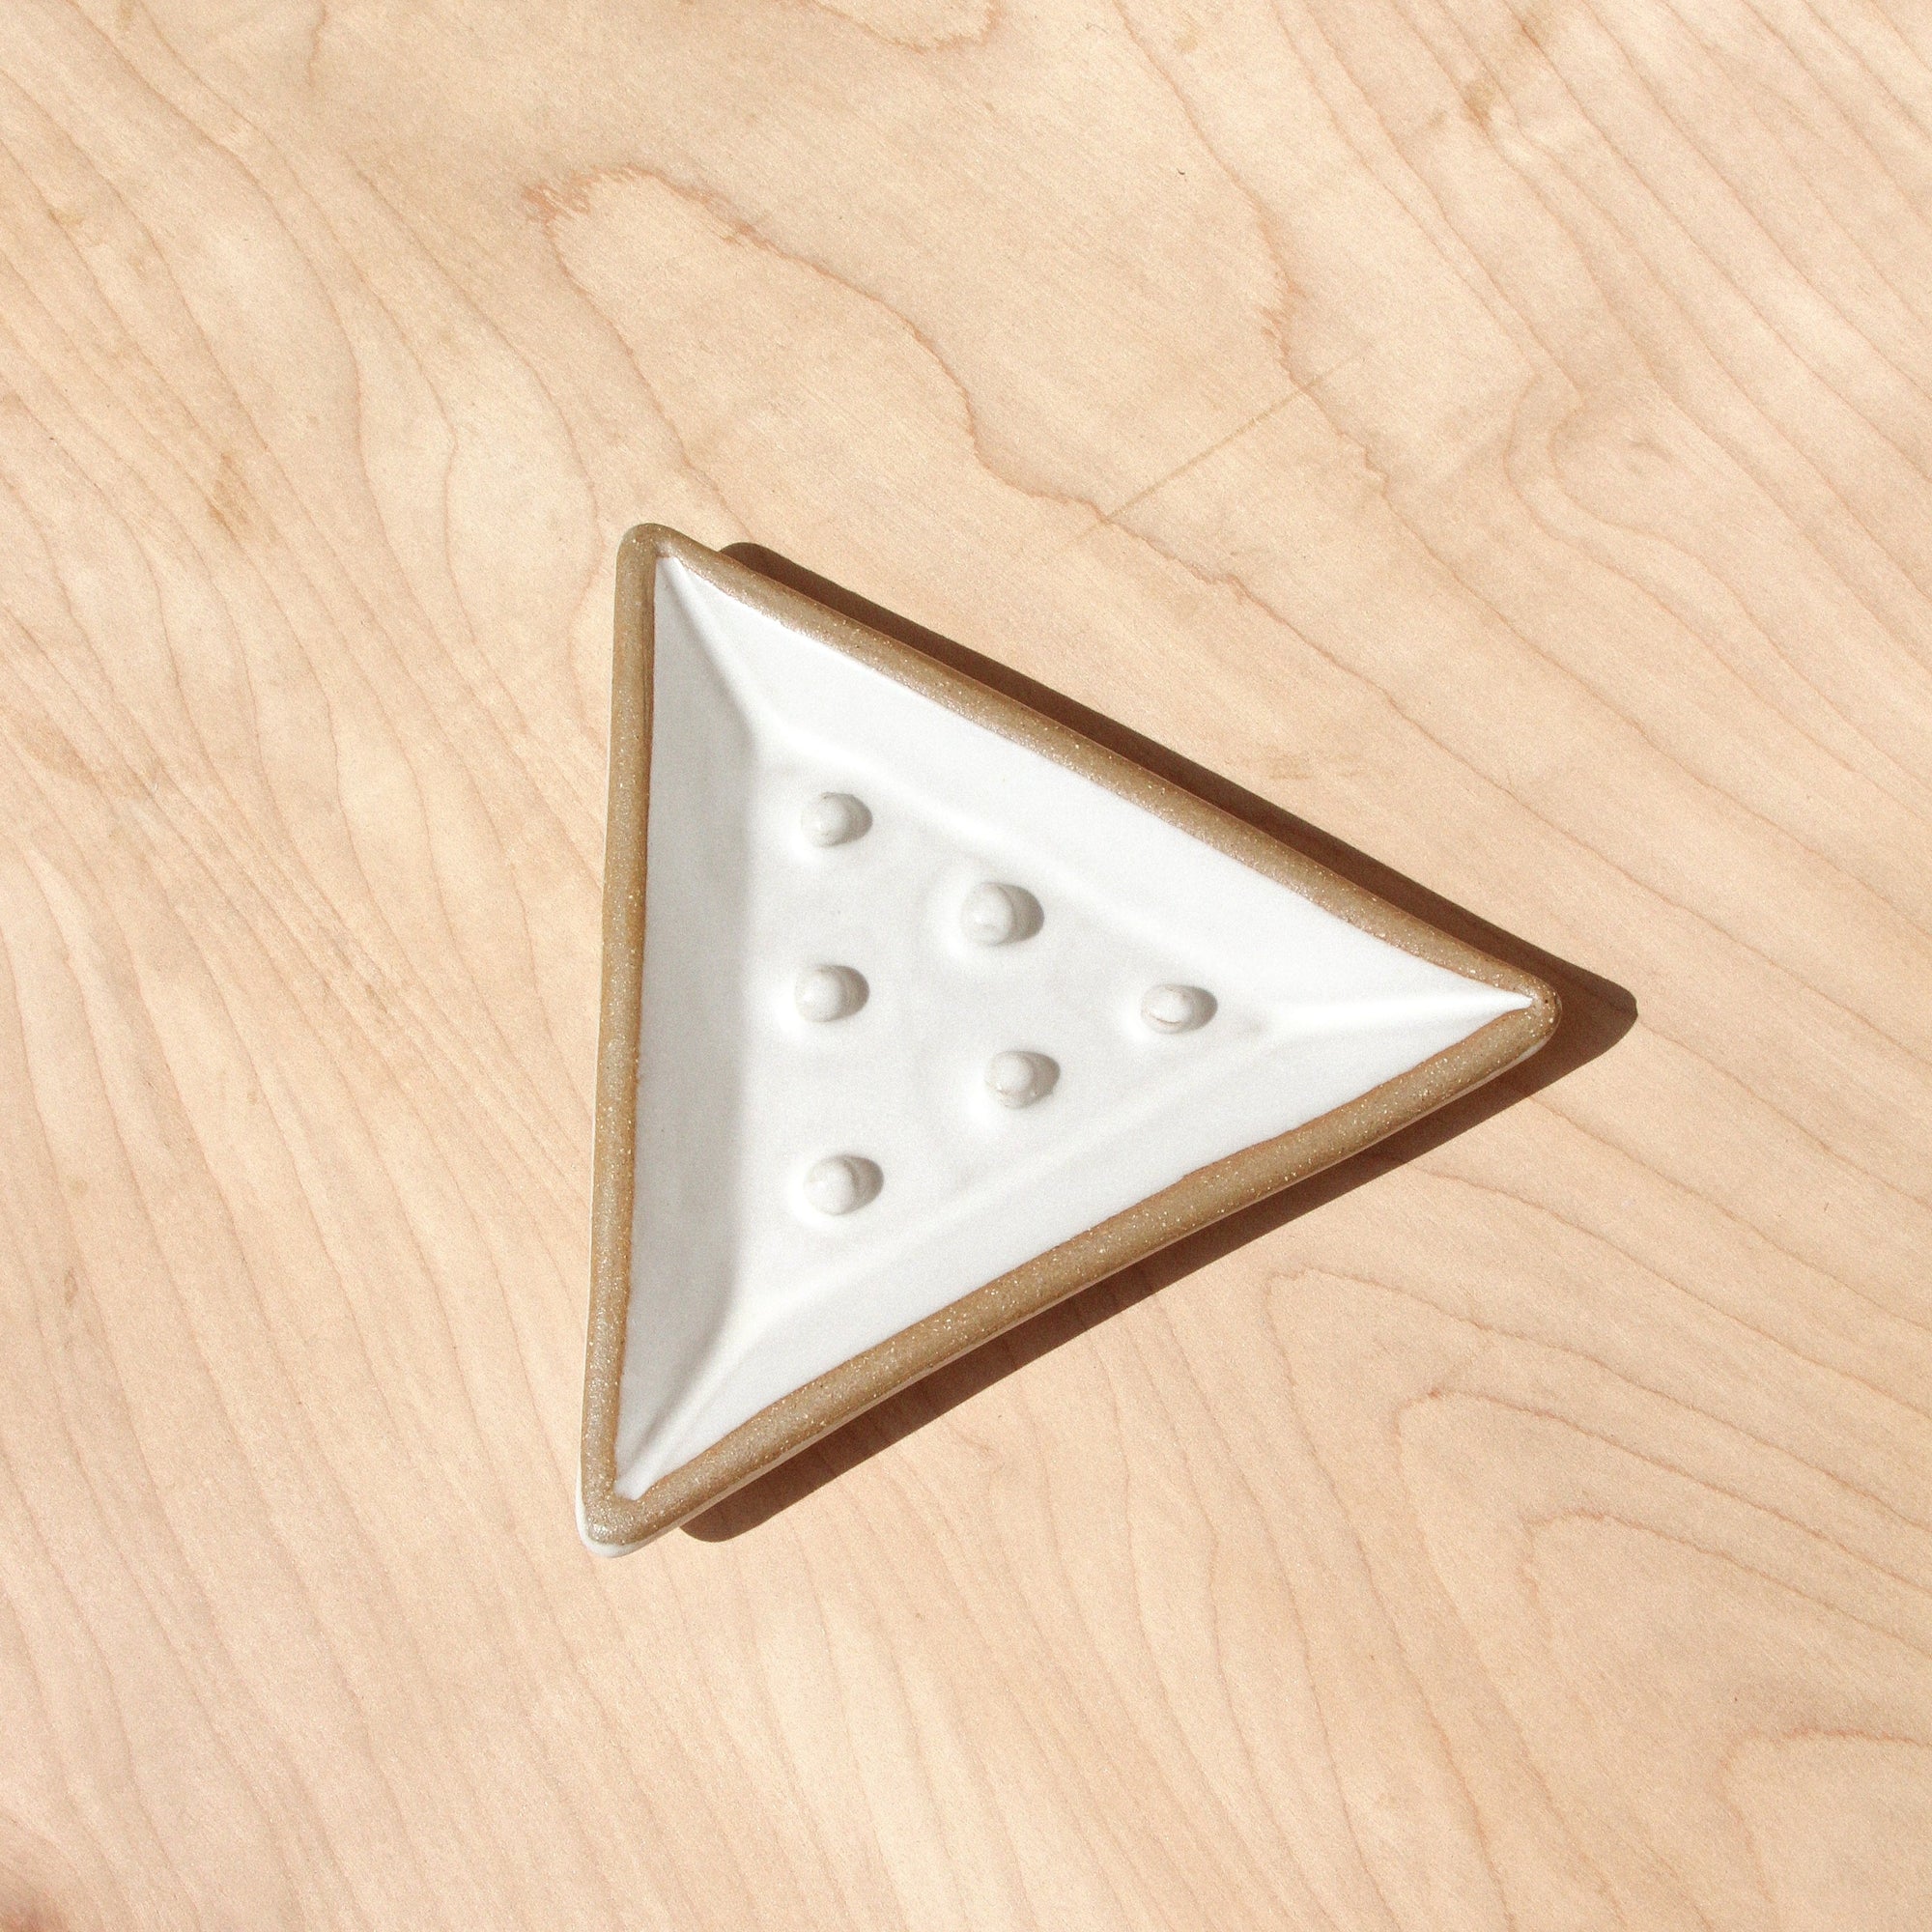 A white ceramic triangle soap dish against wood grain